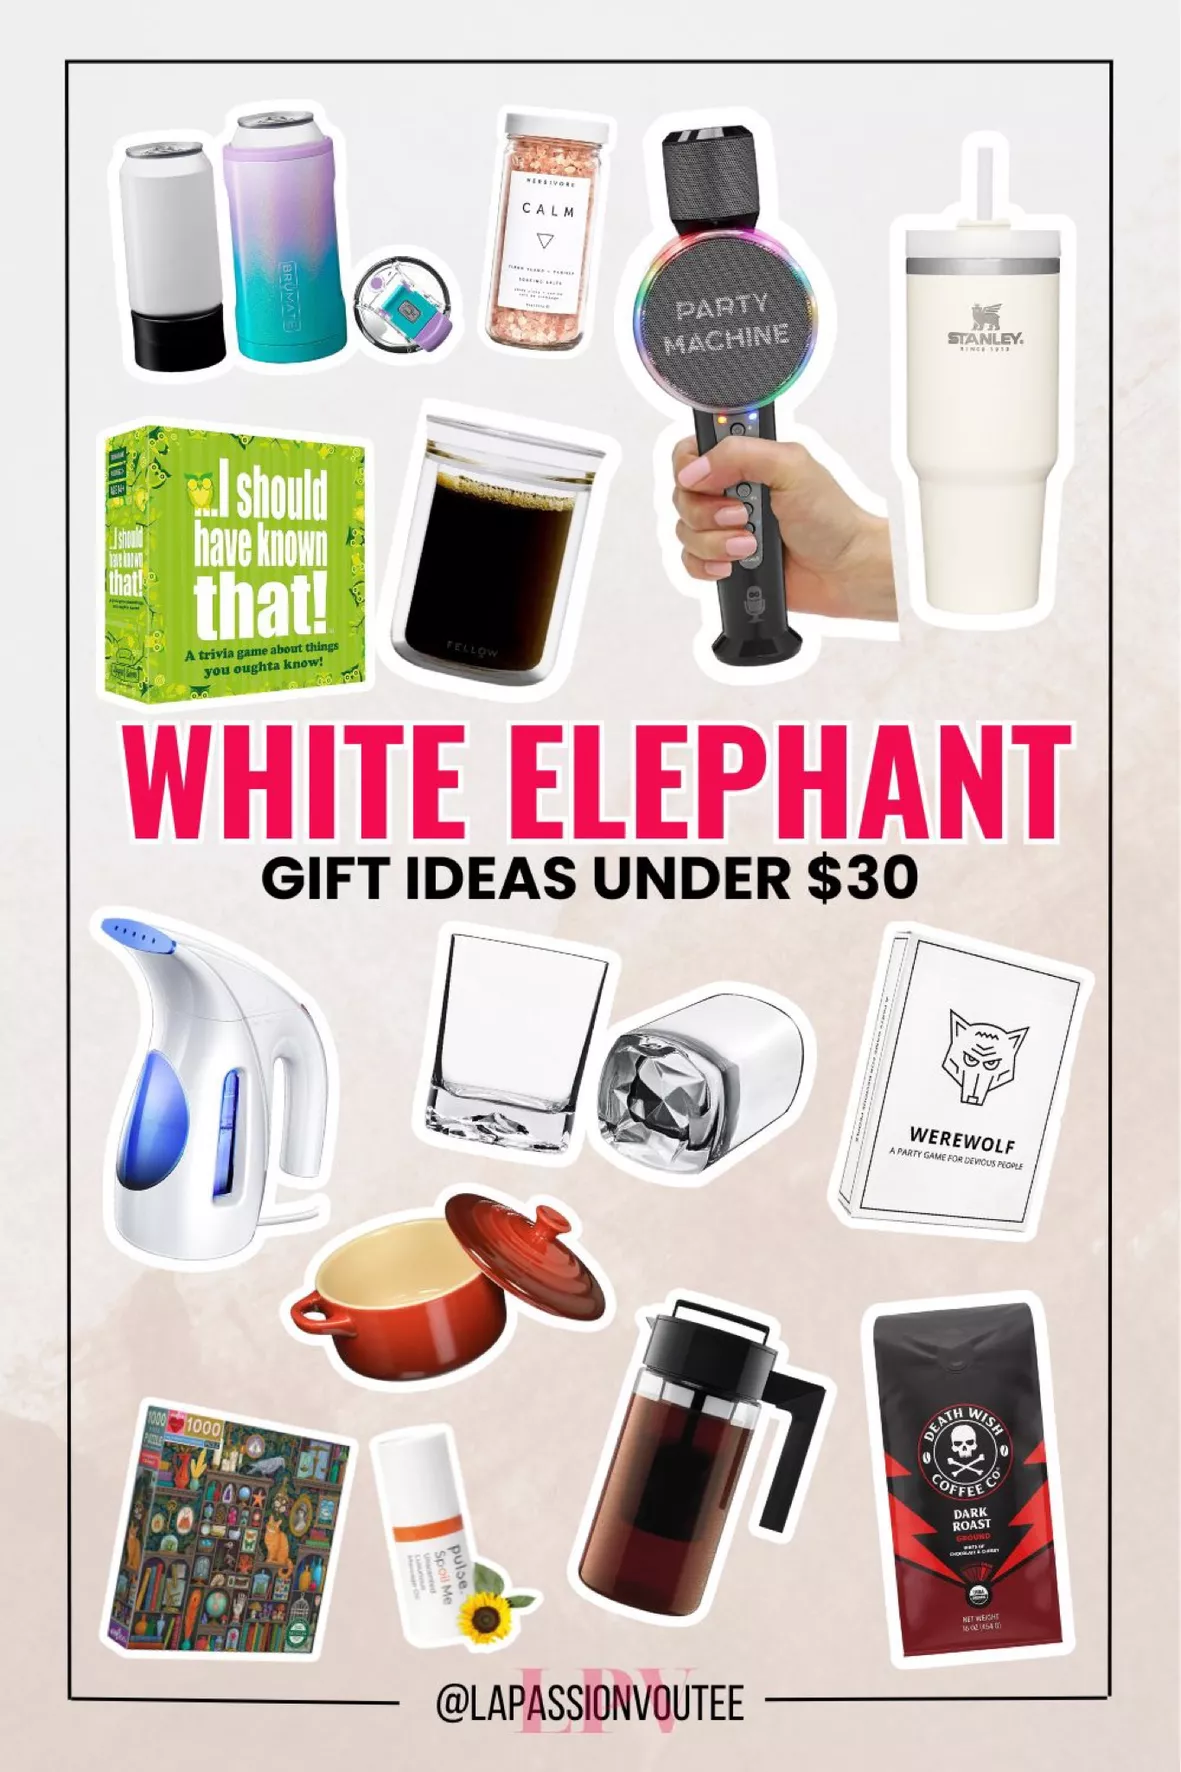 White Elephant Gift Guide